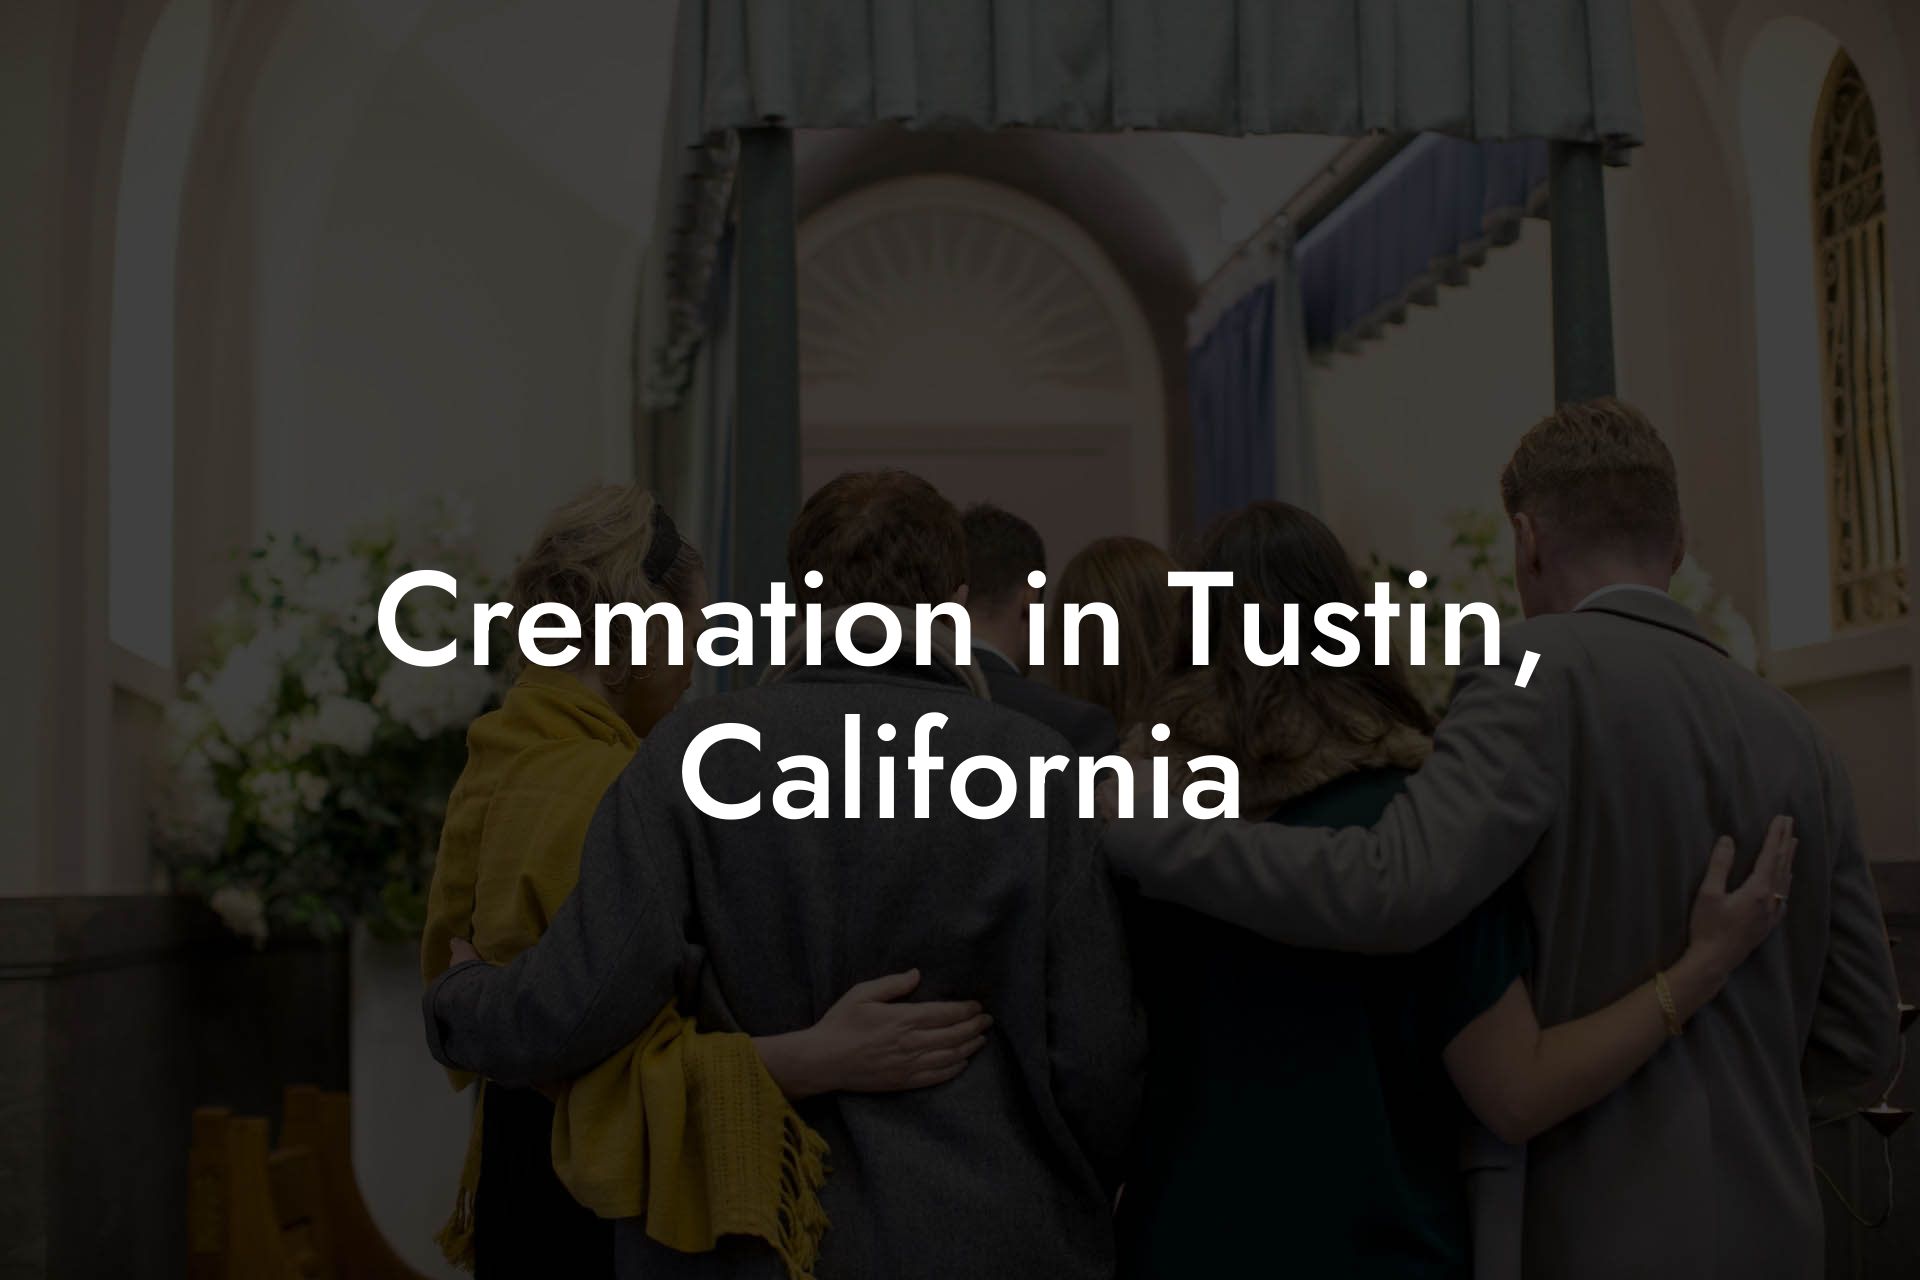 Cremation in Tustin, California